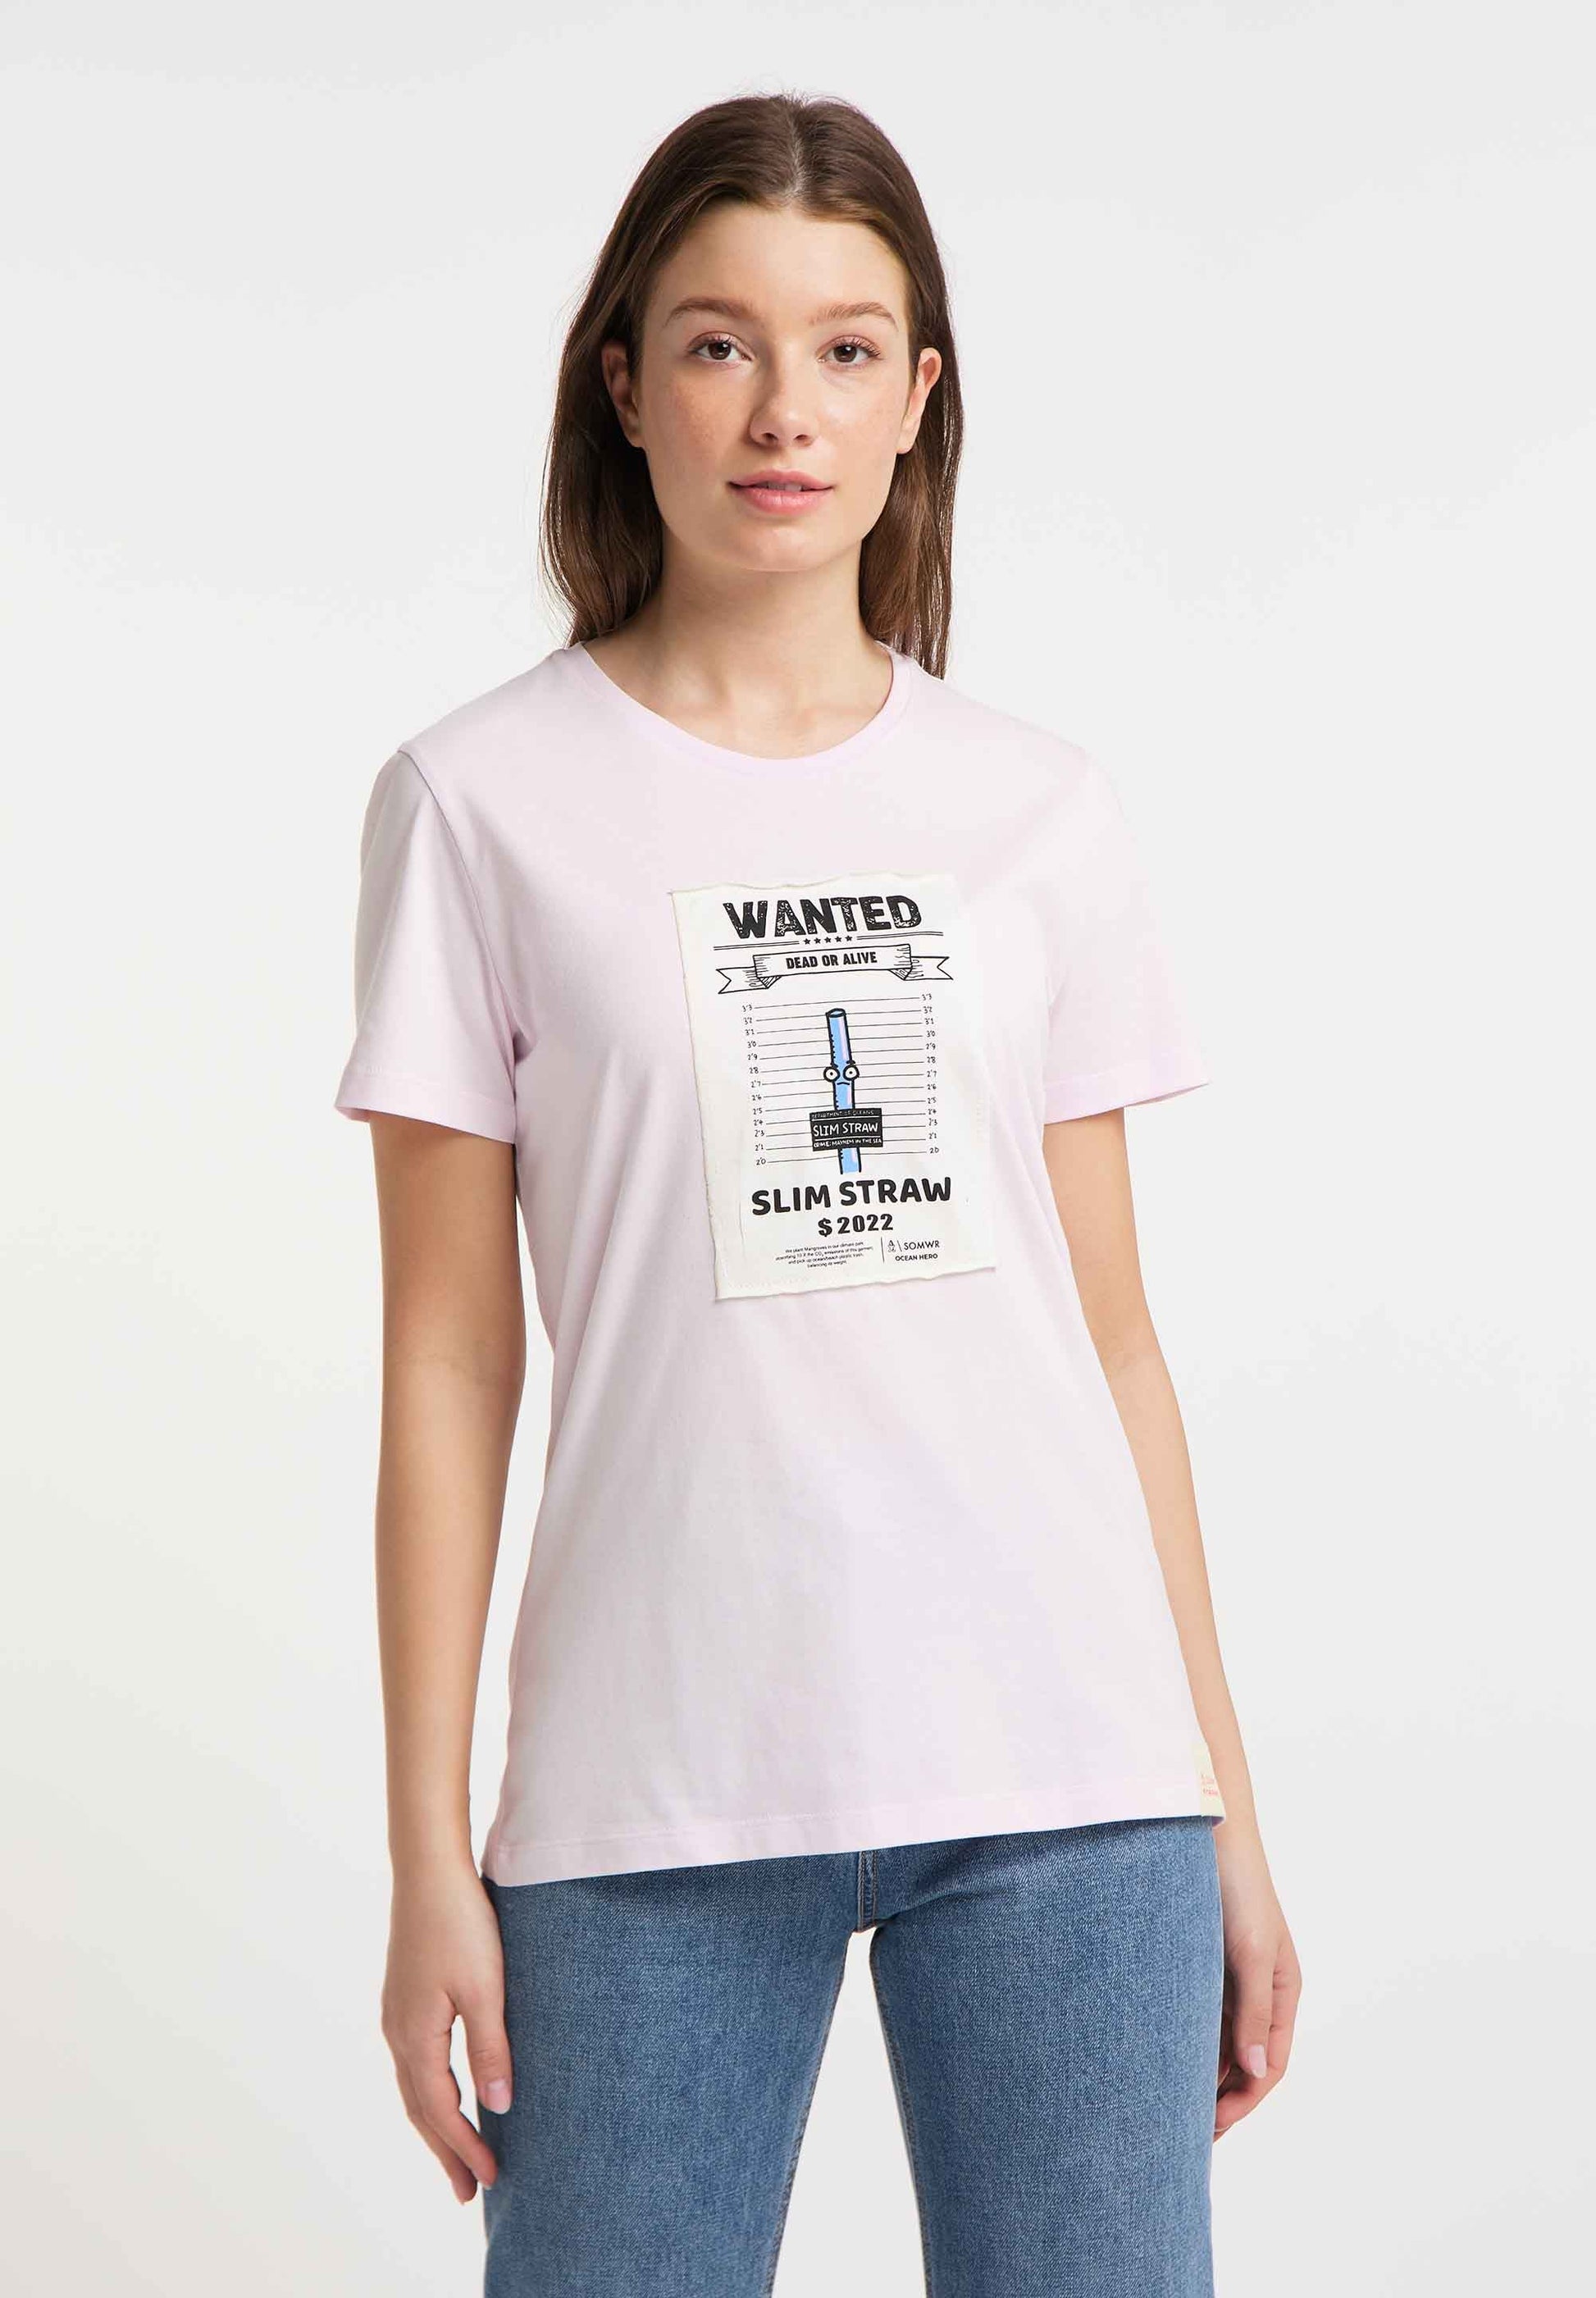 SOMWR BANDIT T-Shirt PUR001